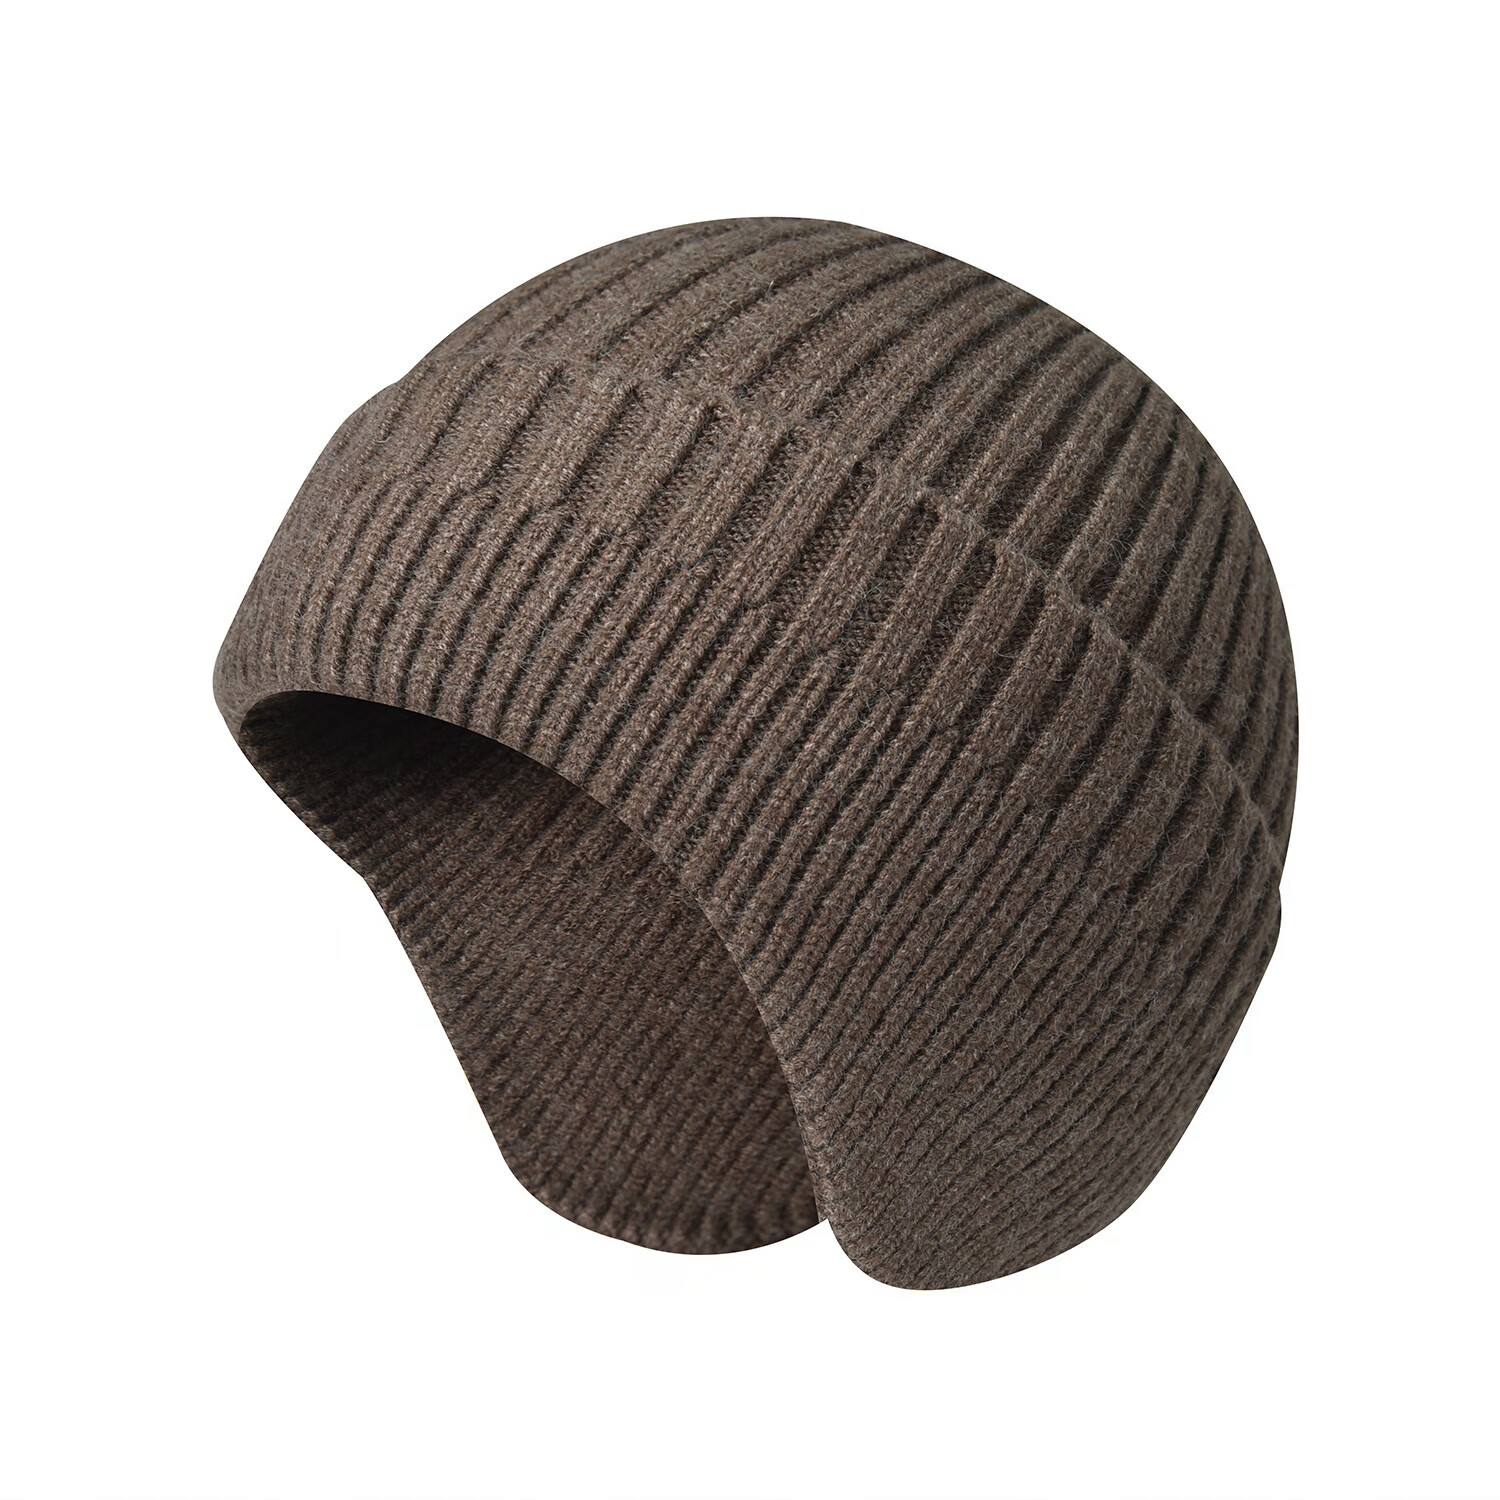 TFO 保暖针织帽 加厚保暖护耳户外帽子2302305 咖啡色 127.2元